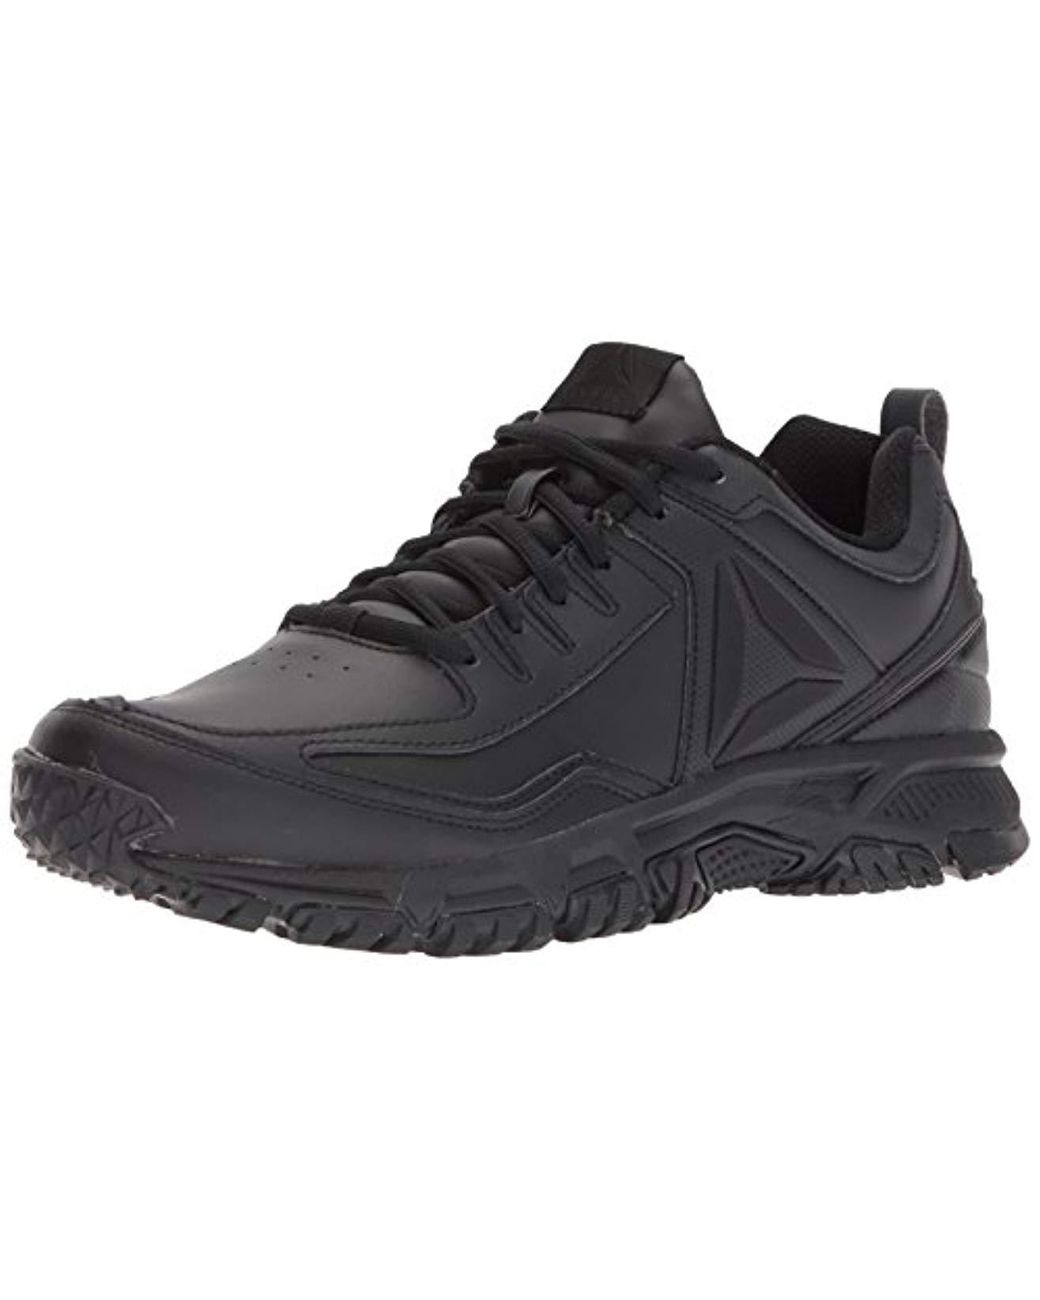 Men Reebok Ridgerider Sneaker Shoe CN0954 Color Black 100% Authentic Brand New 